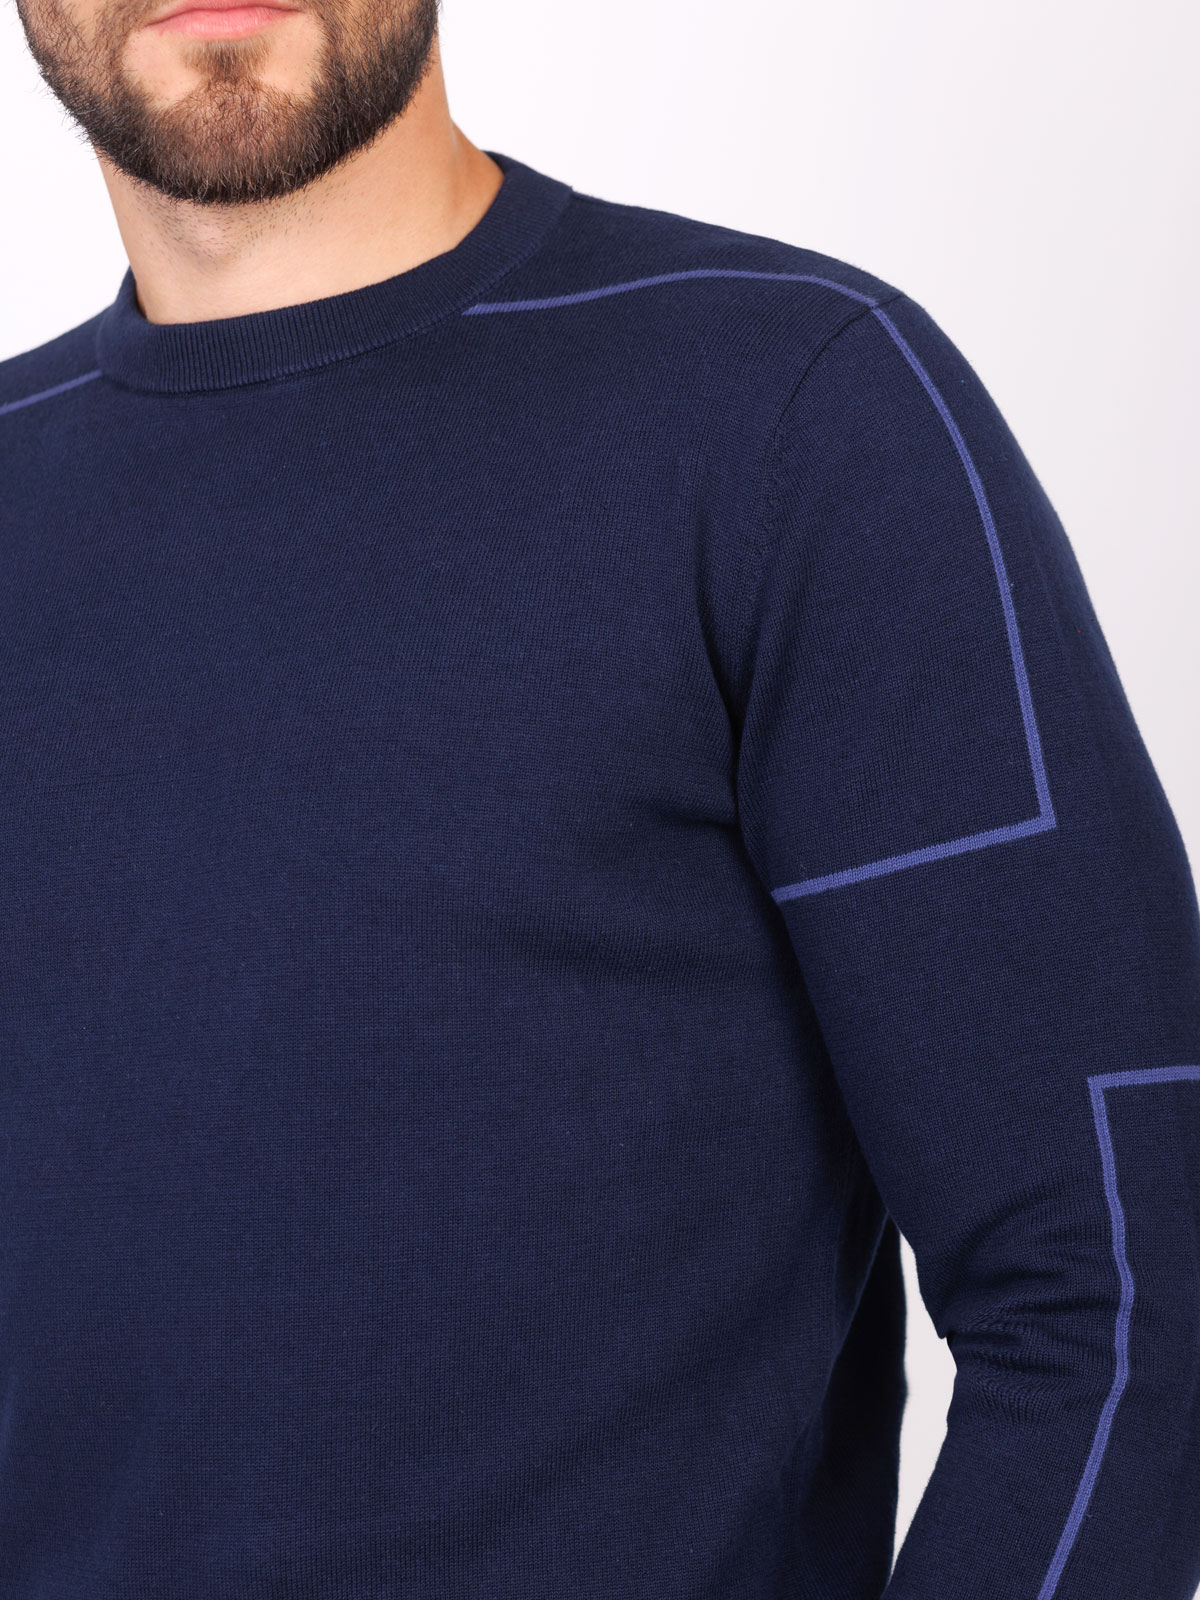 Mens blouse in dark blue - 35313 € 38.81 img3